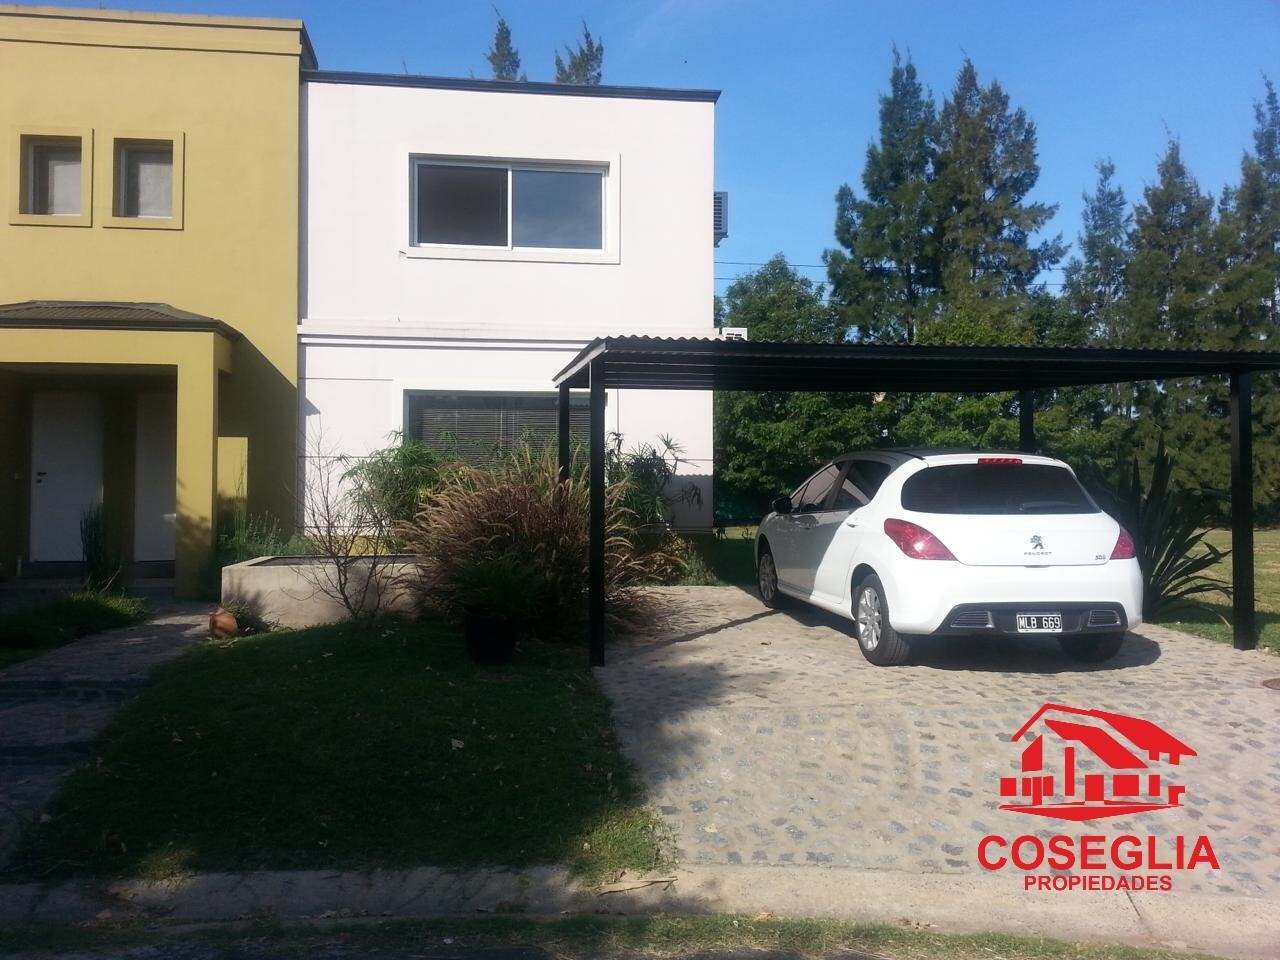 #5075350 | Rental | House | Pilar Plaza (Coseglia Propiedades)